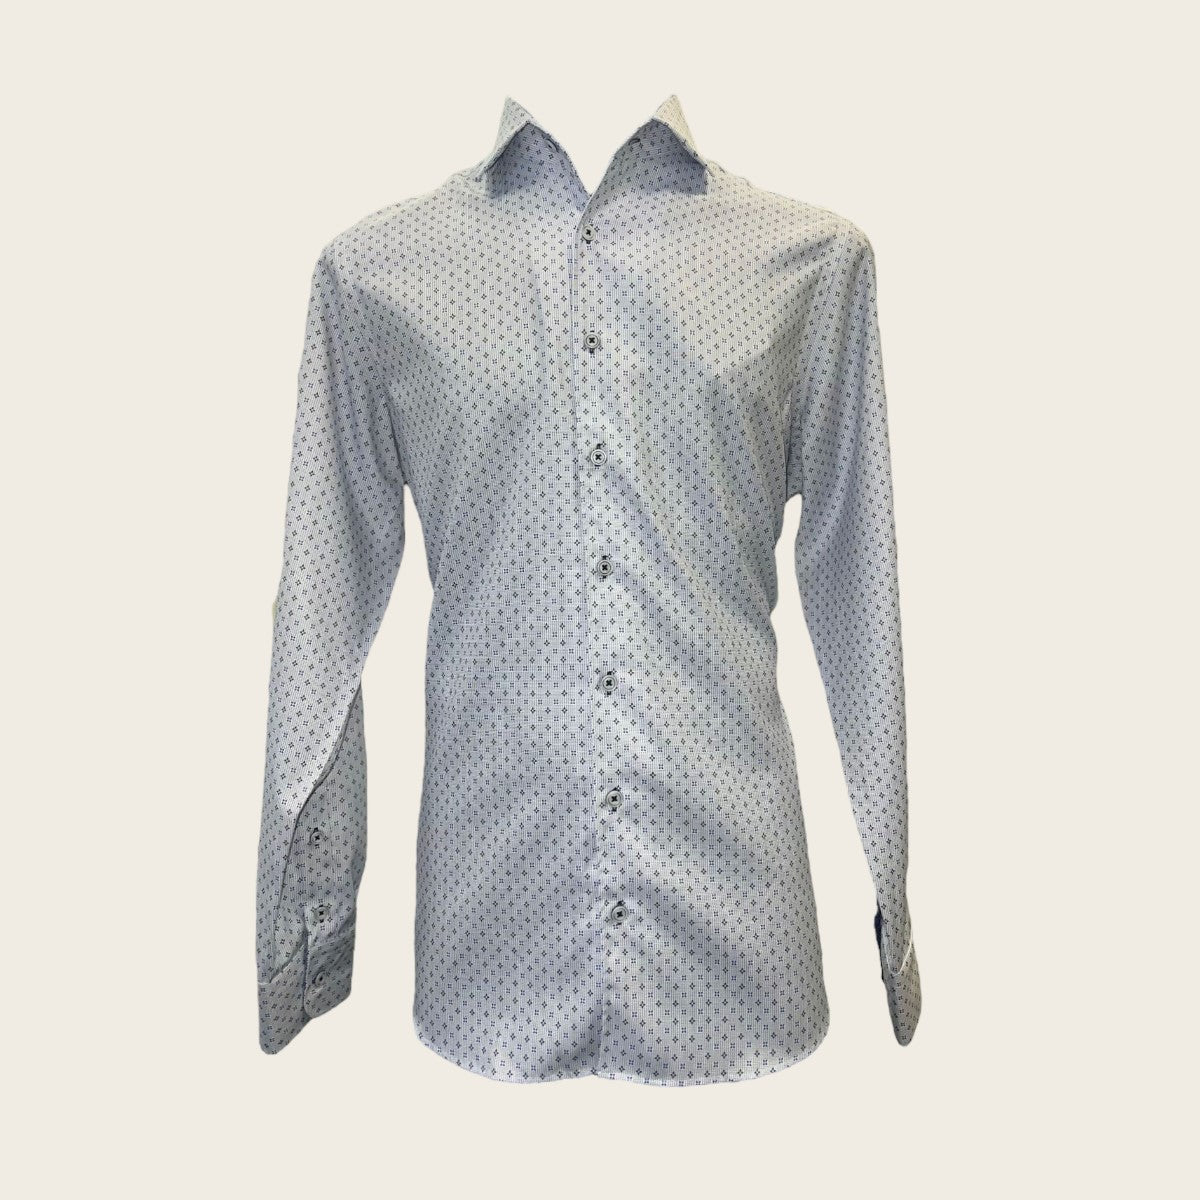 White long sleeve shirt for men with organic motifs, button down